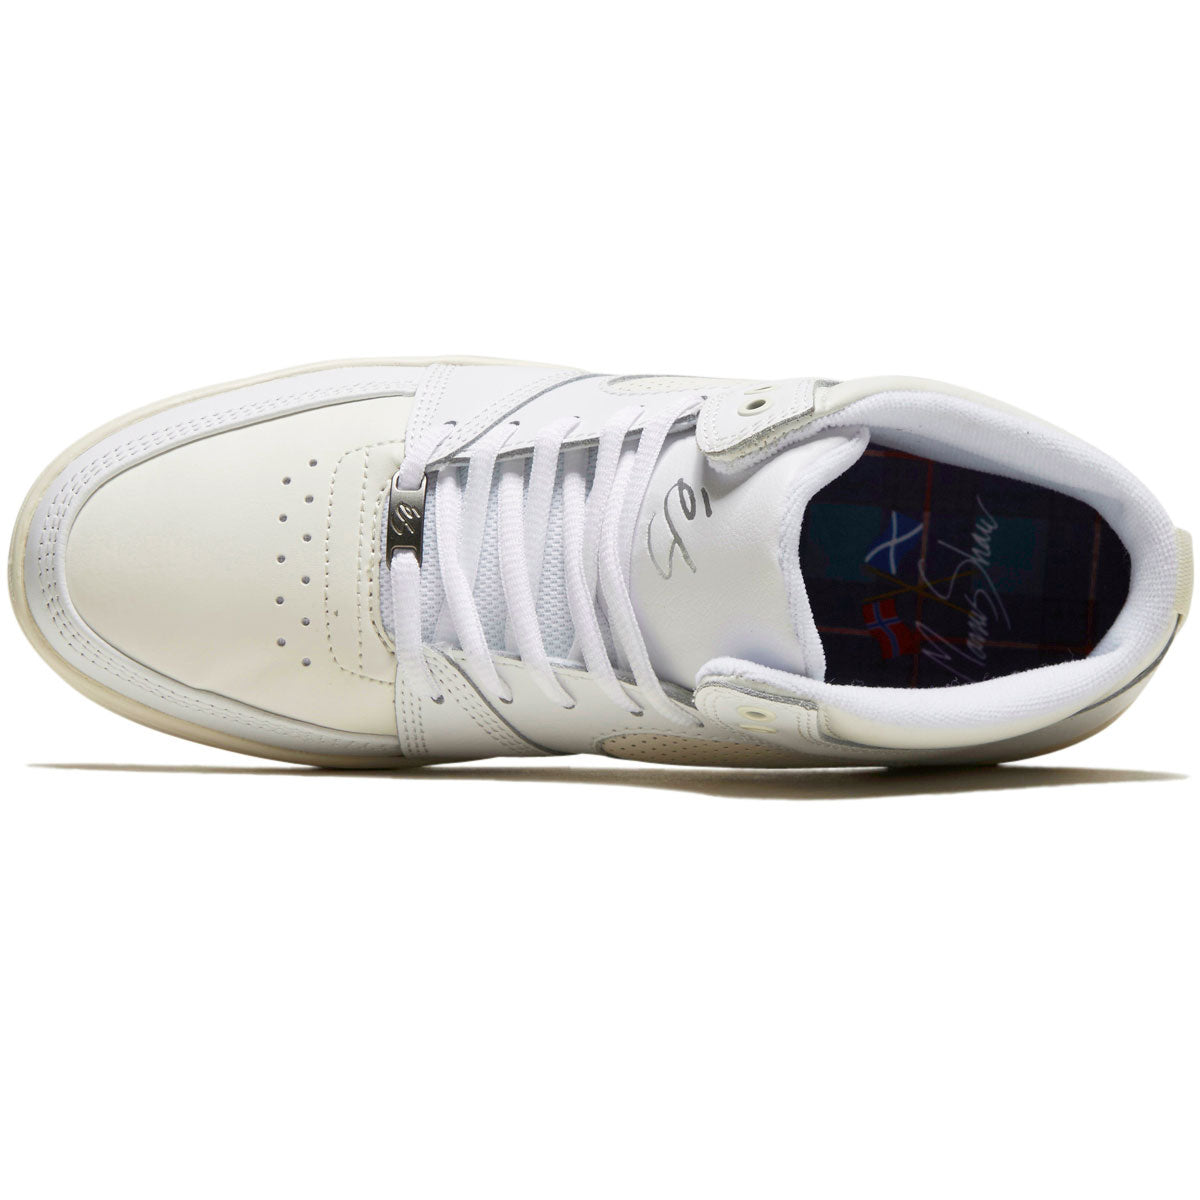 eS Accel Slim Mid Shoes - White/Light Grey image 3